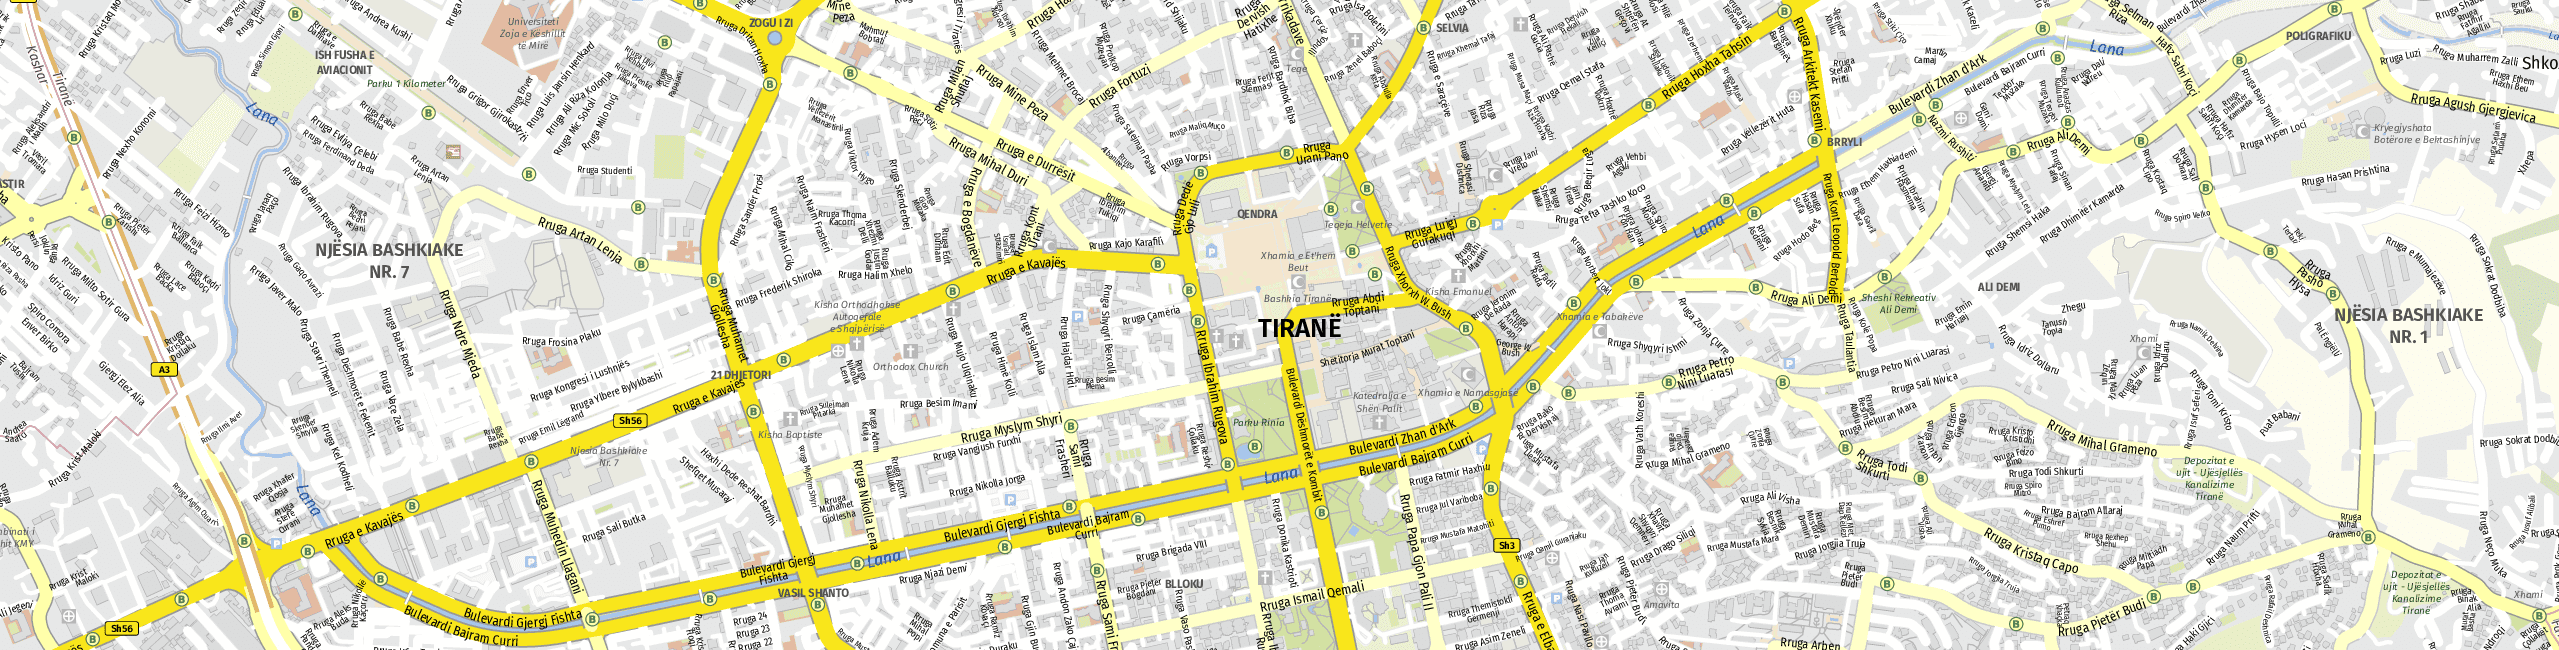 Stadtplan Tirana zum Downloaden.